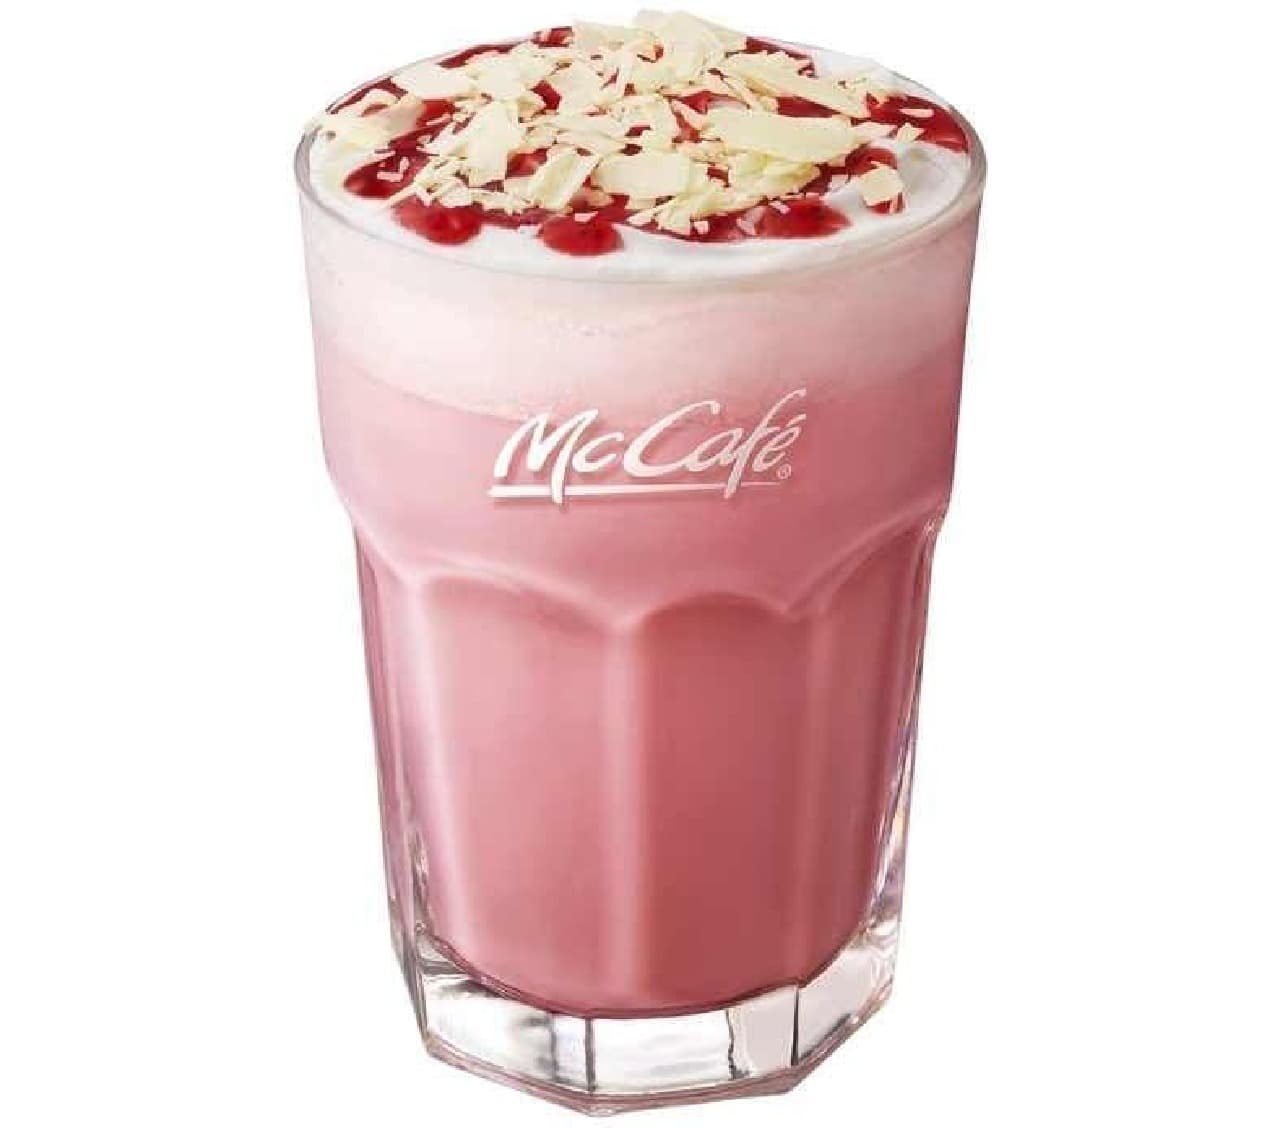 McDonald's "White Chocolate Strawberry Latte"